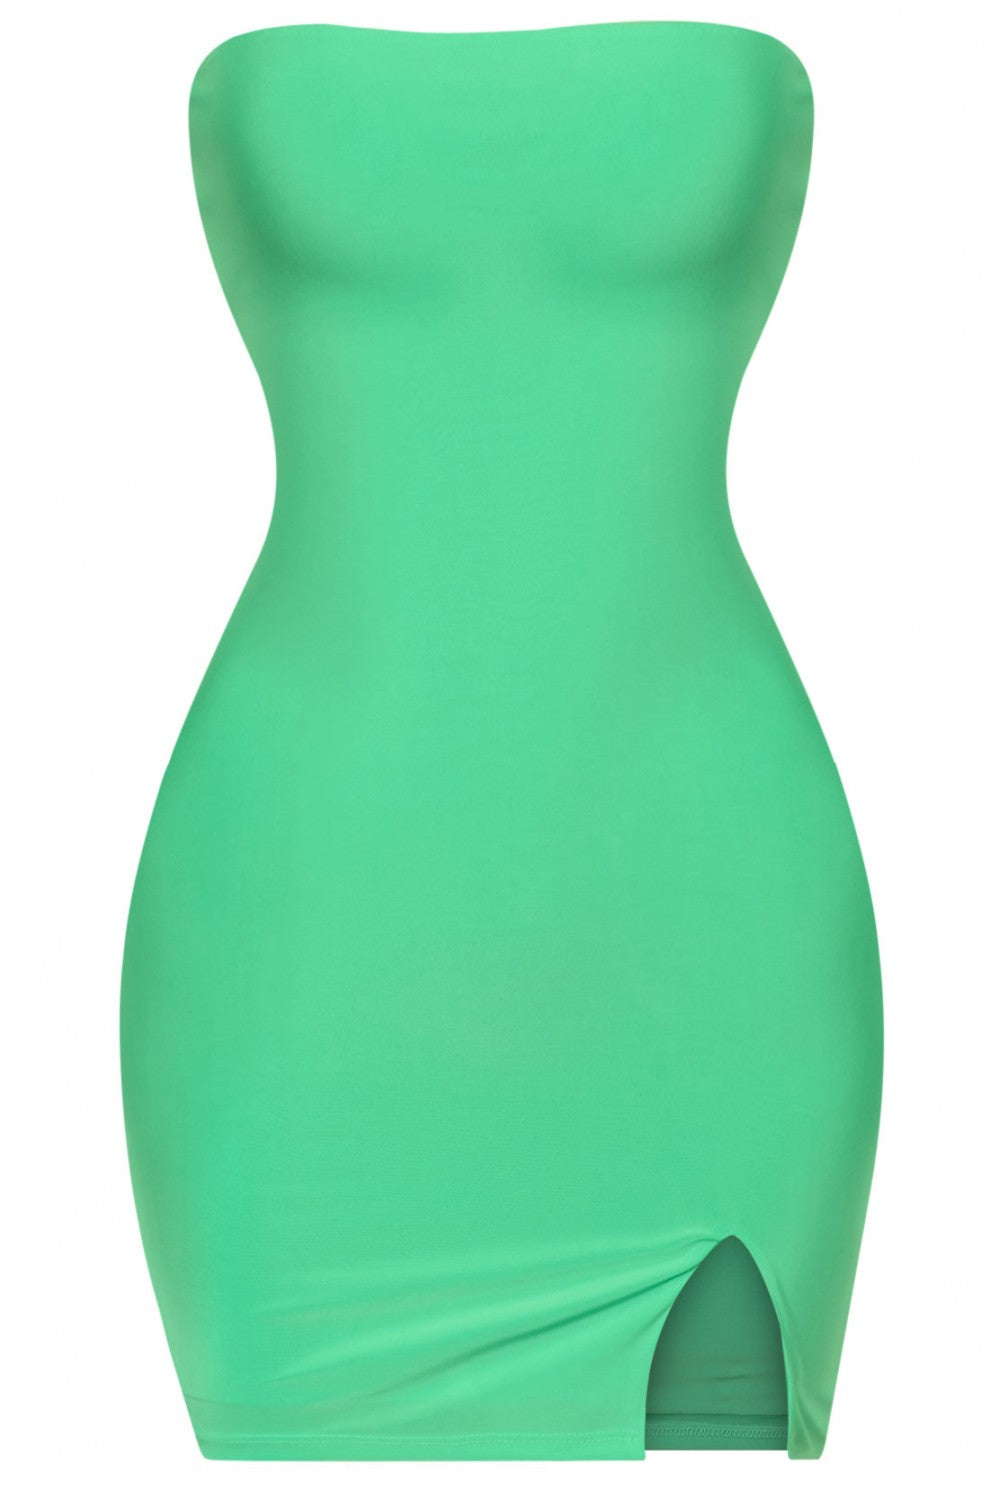 Breeyana Green Tube Side Slit Mini Dress - Style Baby OMG Fashion Boutique - Stylebabyomg - Buy - Aesthetic Baddie Outfits - Babyboo - OOTD - Shie 